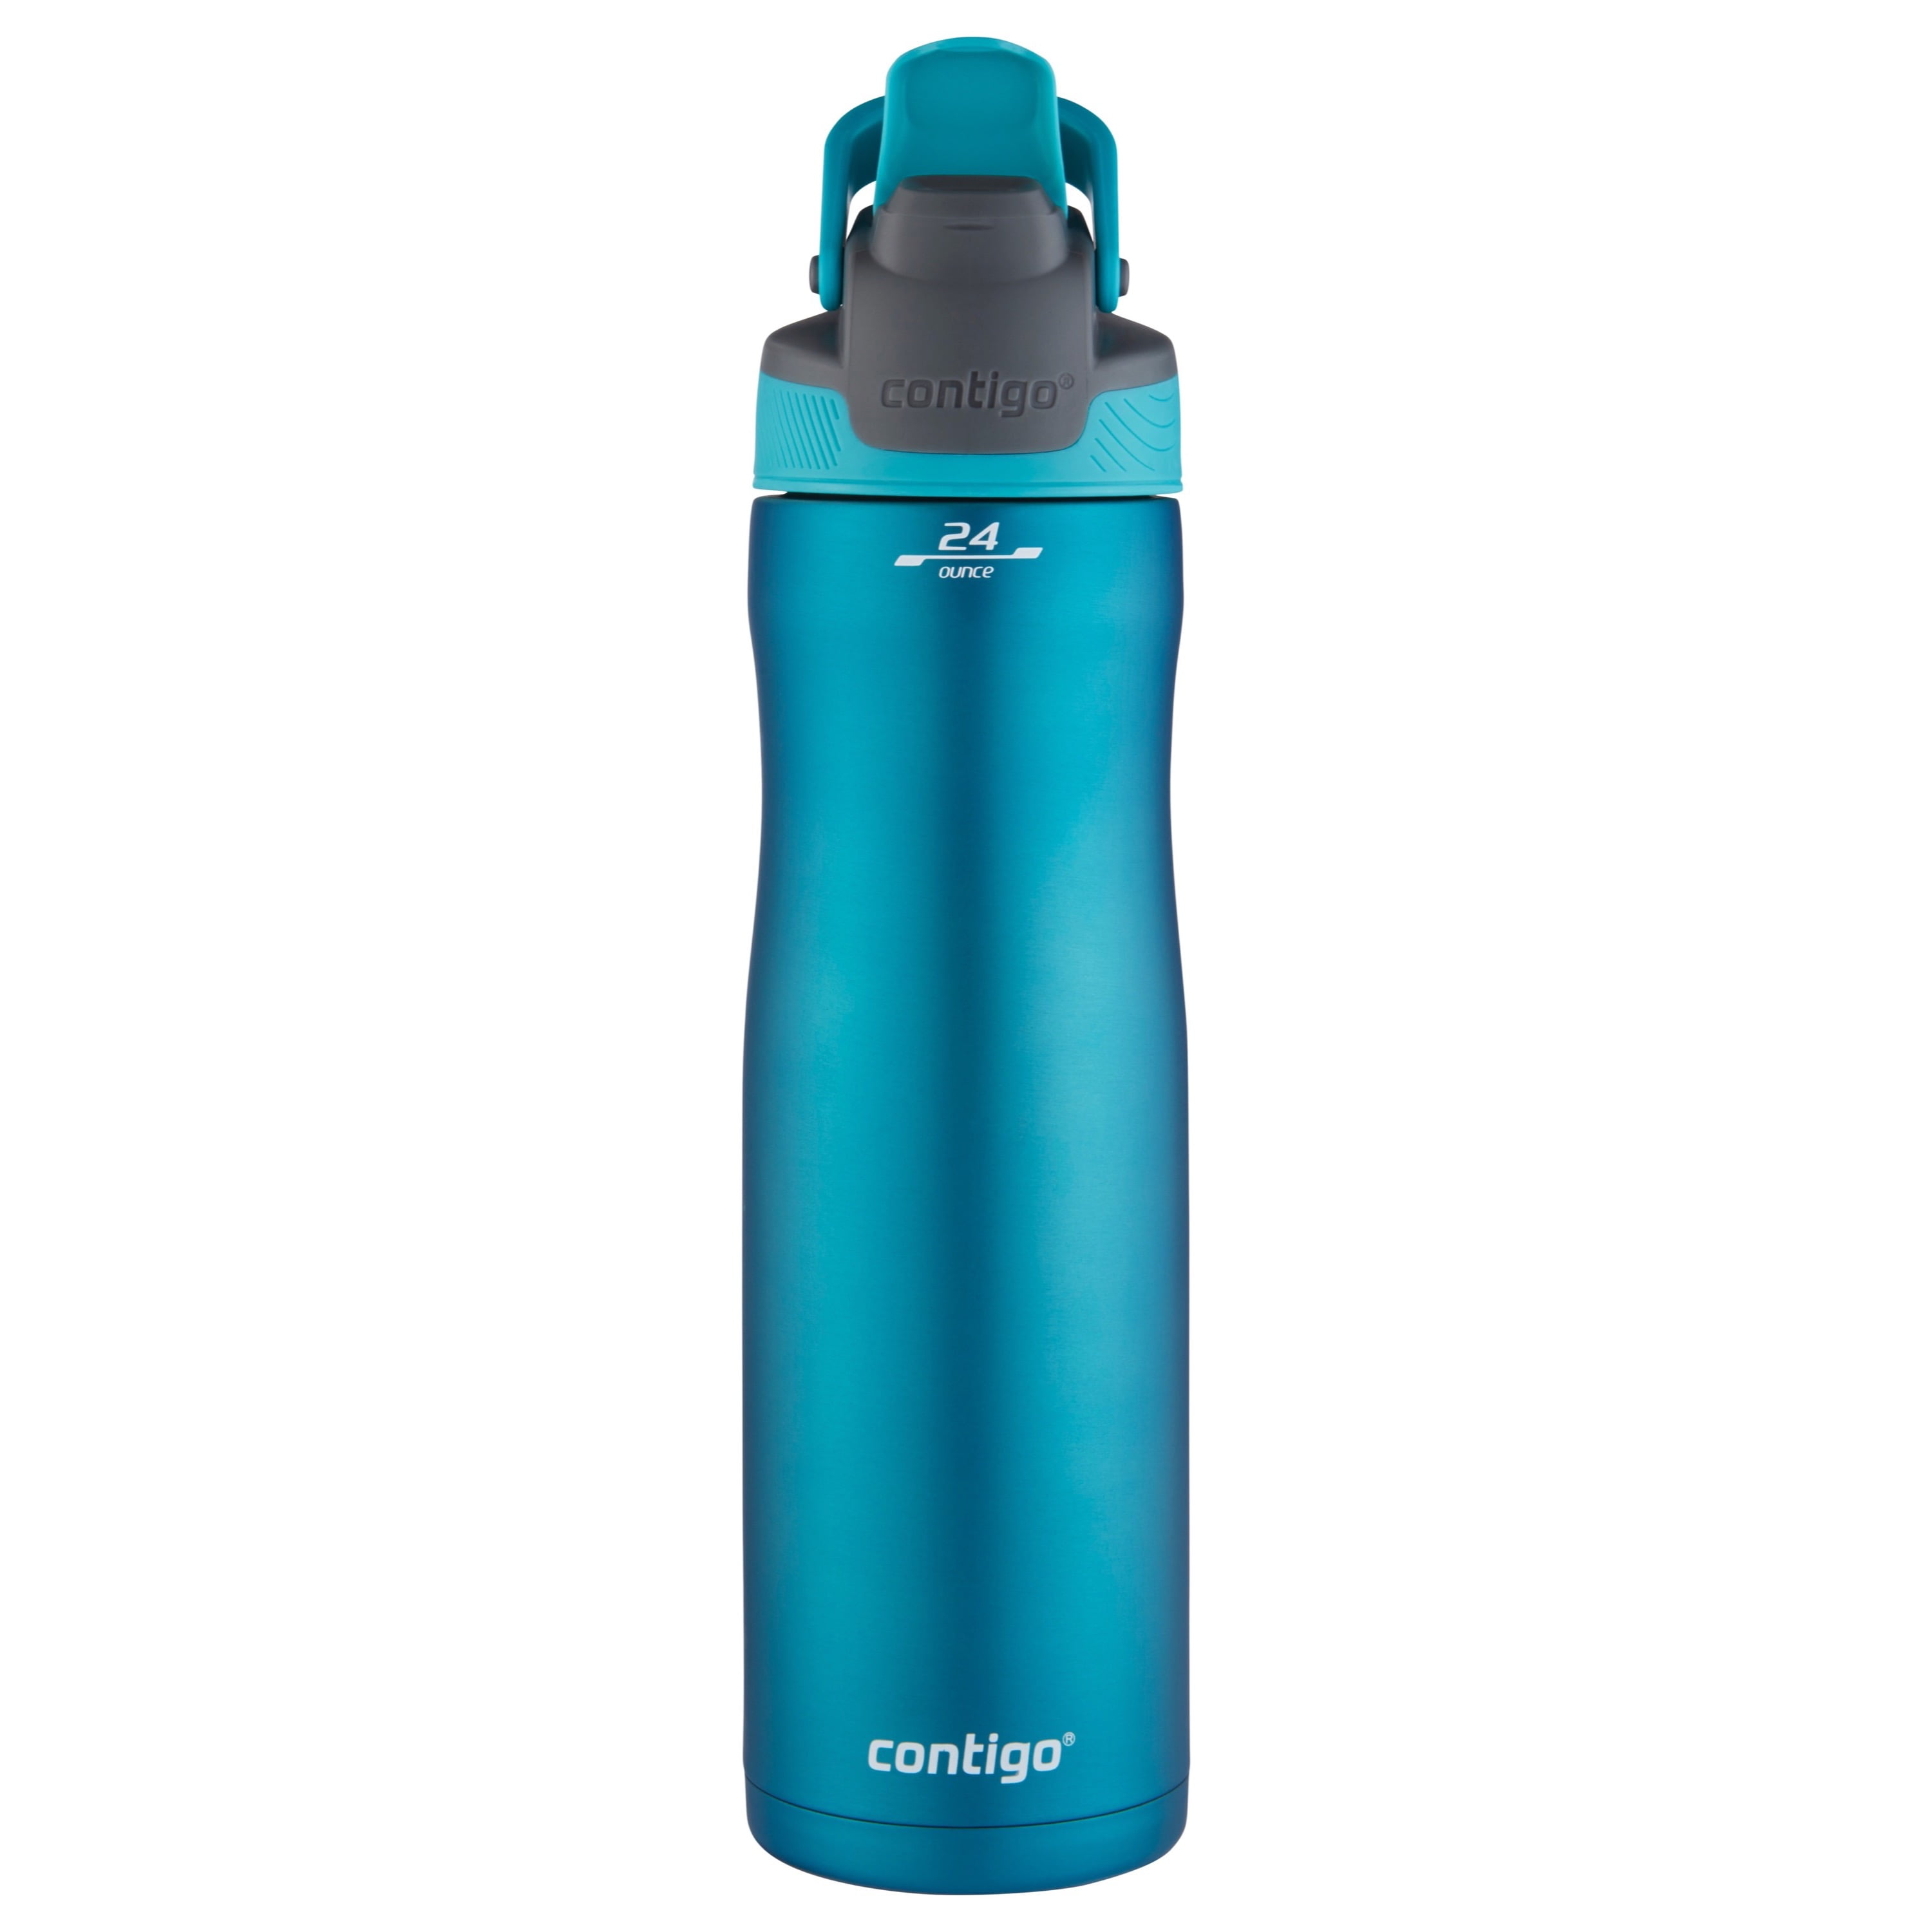 Contigo AUTOSEAL Kangaroo Water Bottle with Storage Compartment 24 oz. Blue 